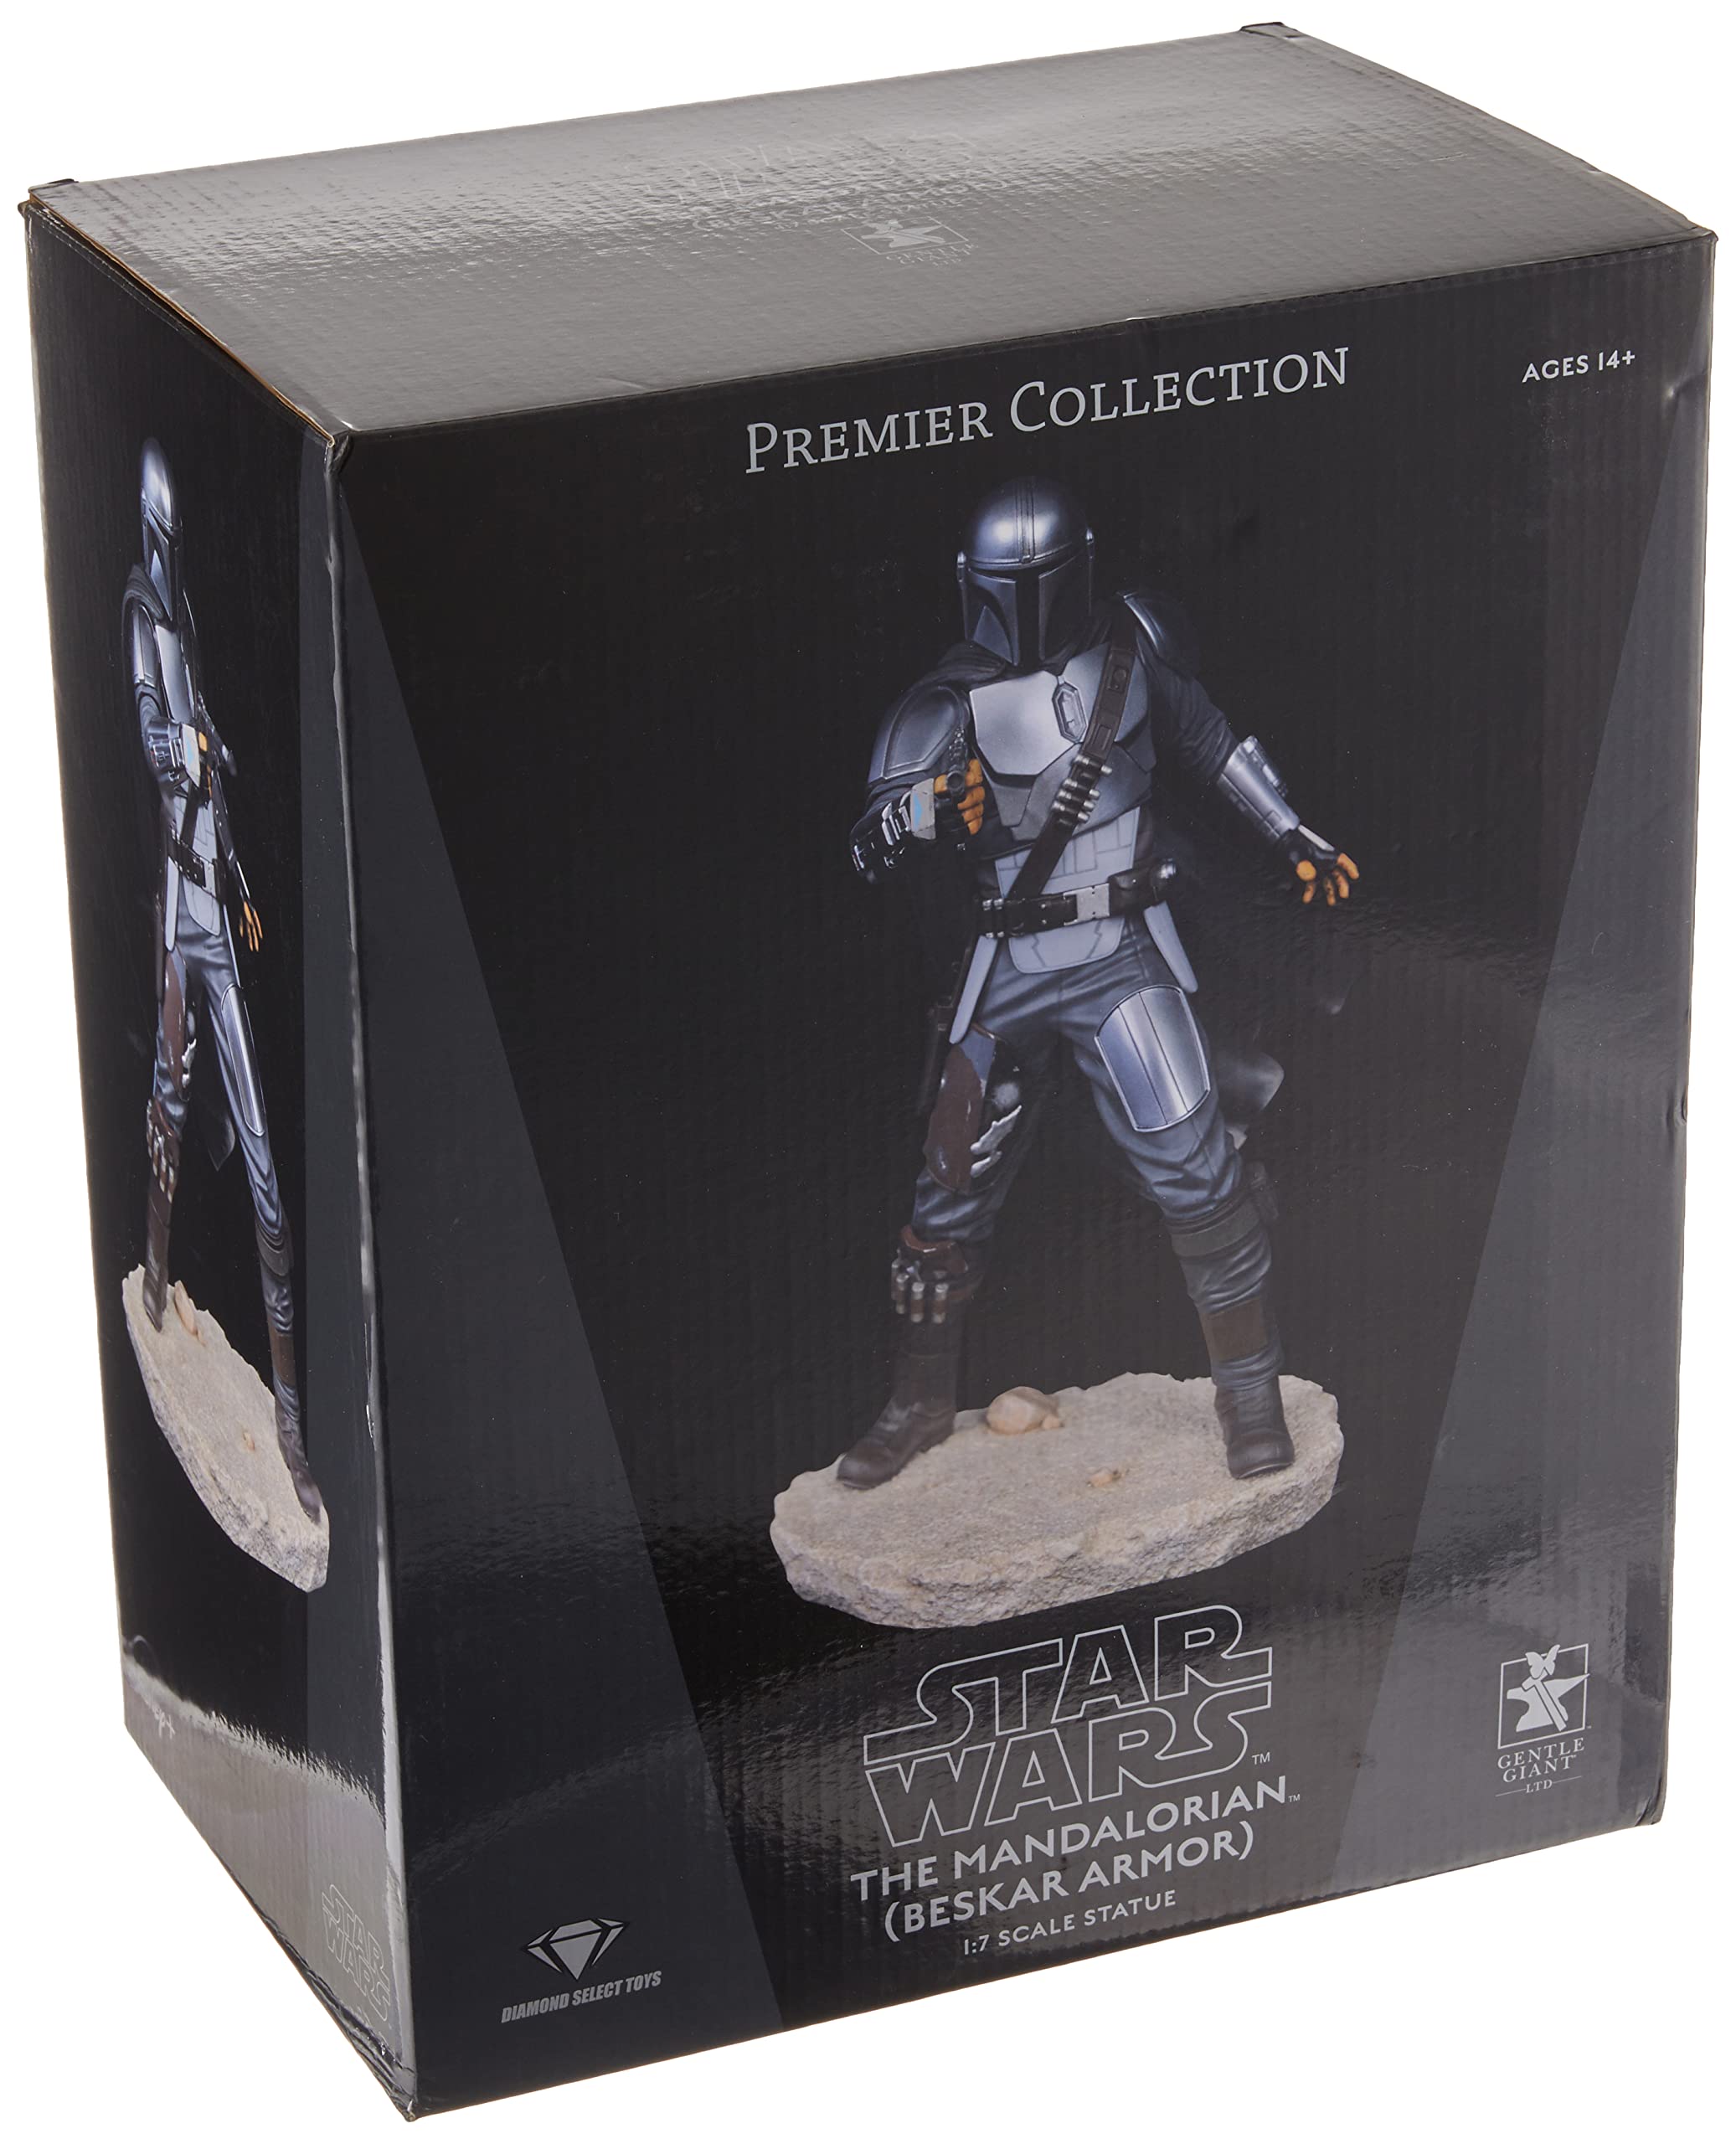 Star Wars Premier Collection: The Mandalorian MK3 1:7 Scale Statue, Multicolor, 10 inches